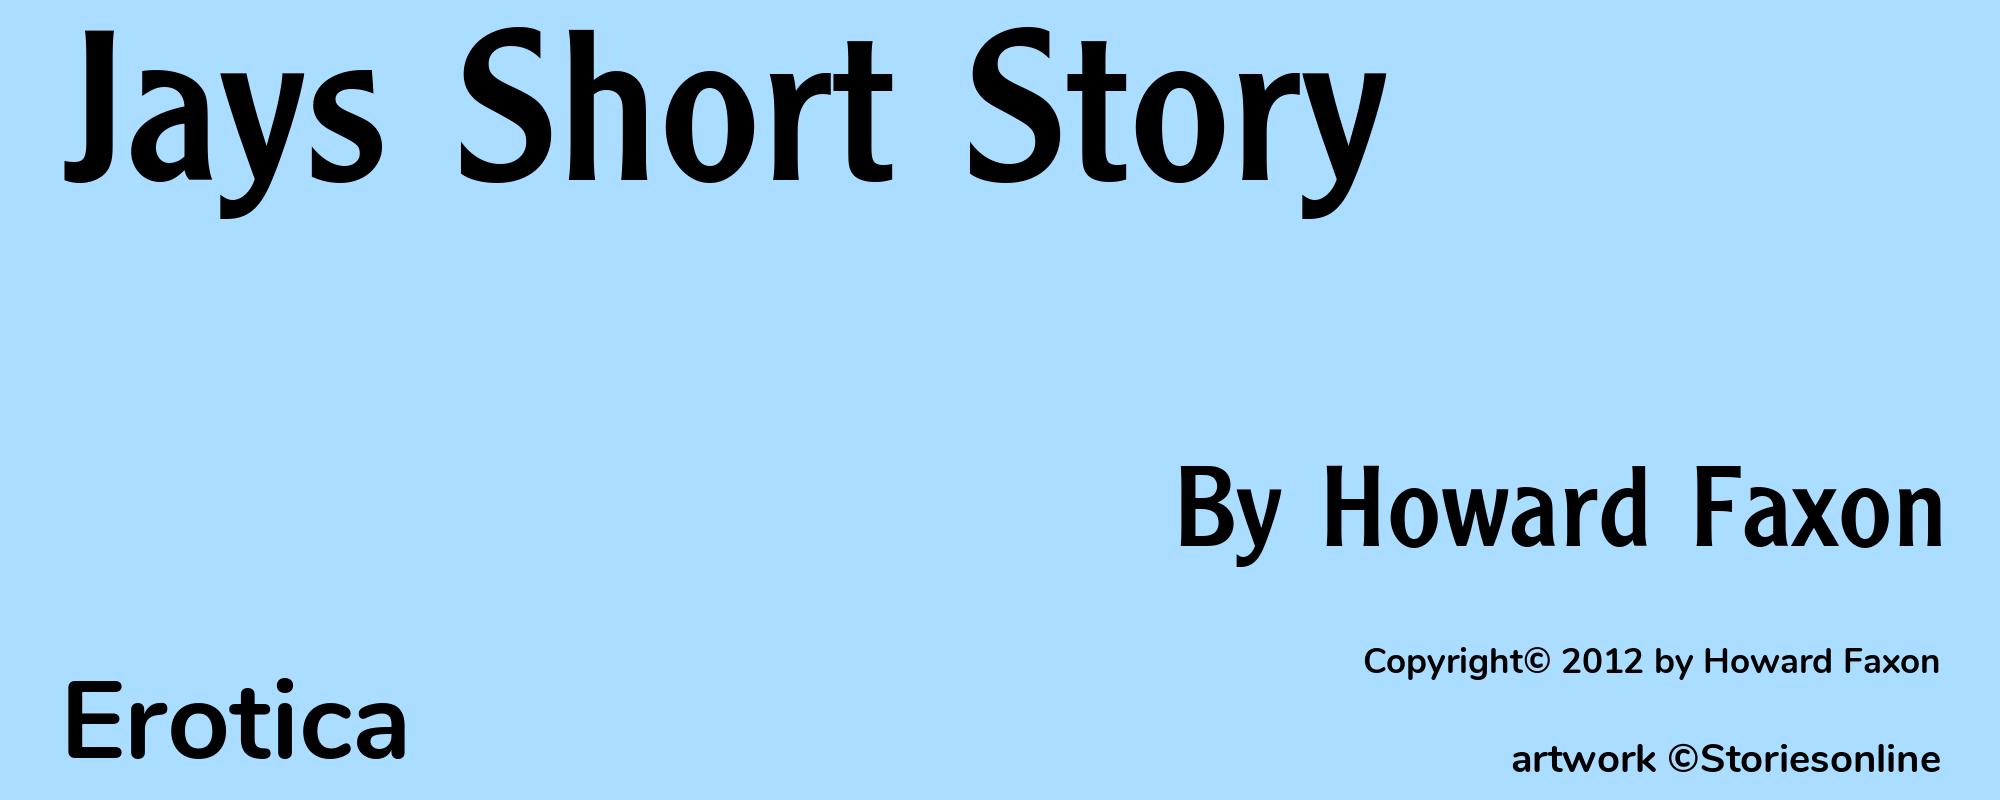 Jays Short Story - Cover